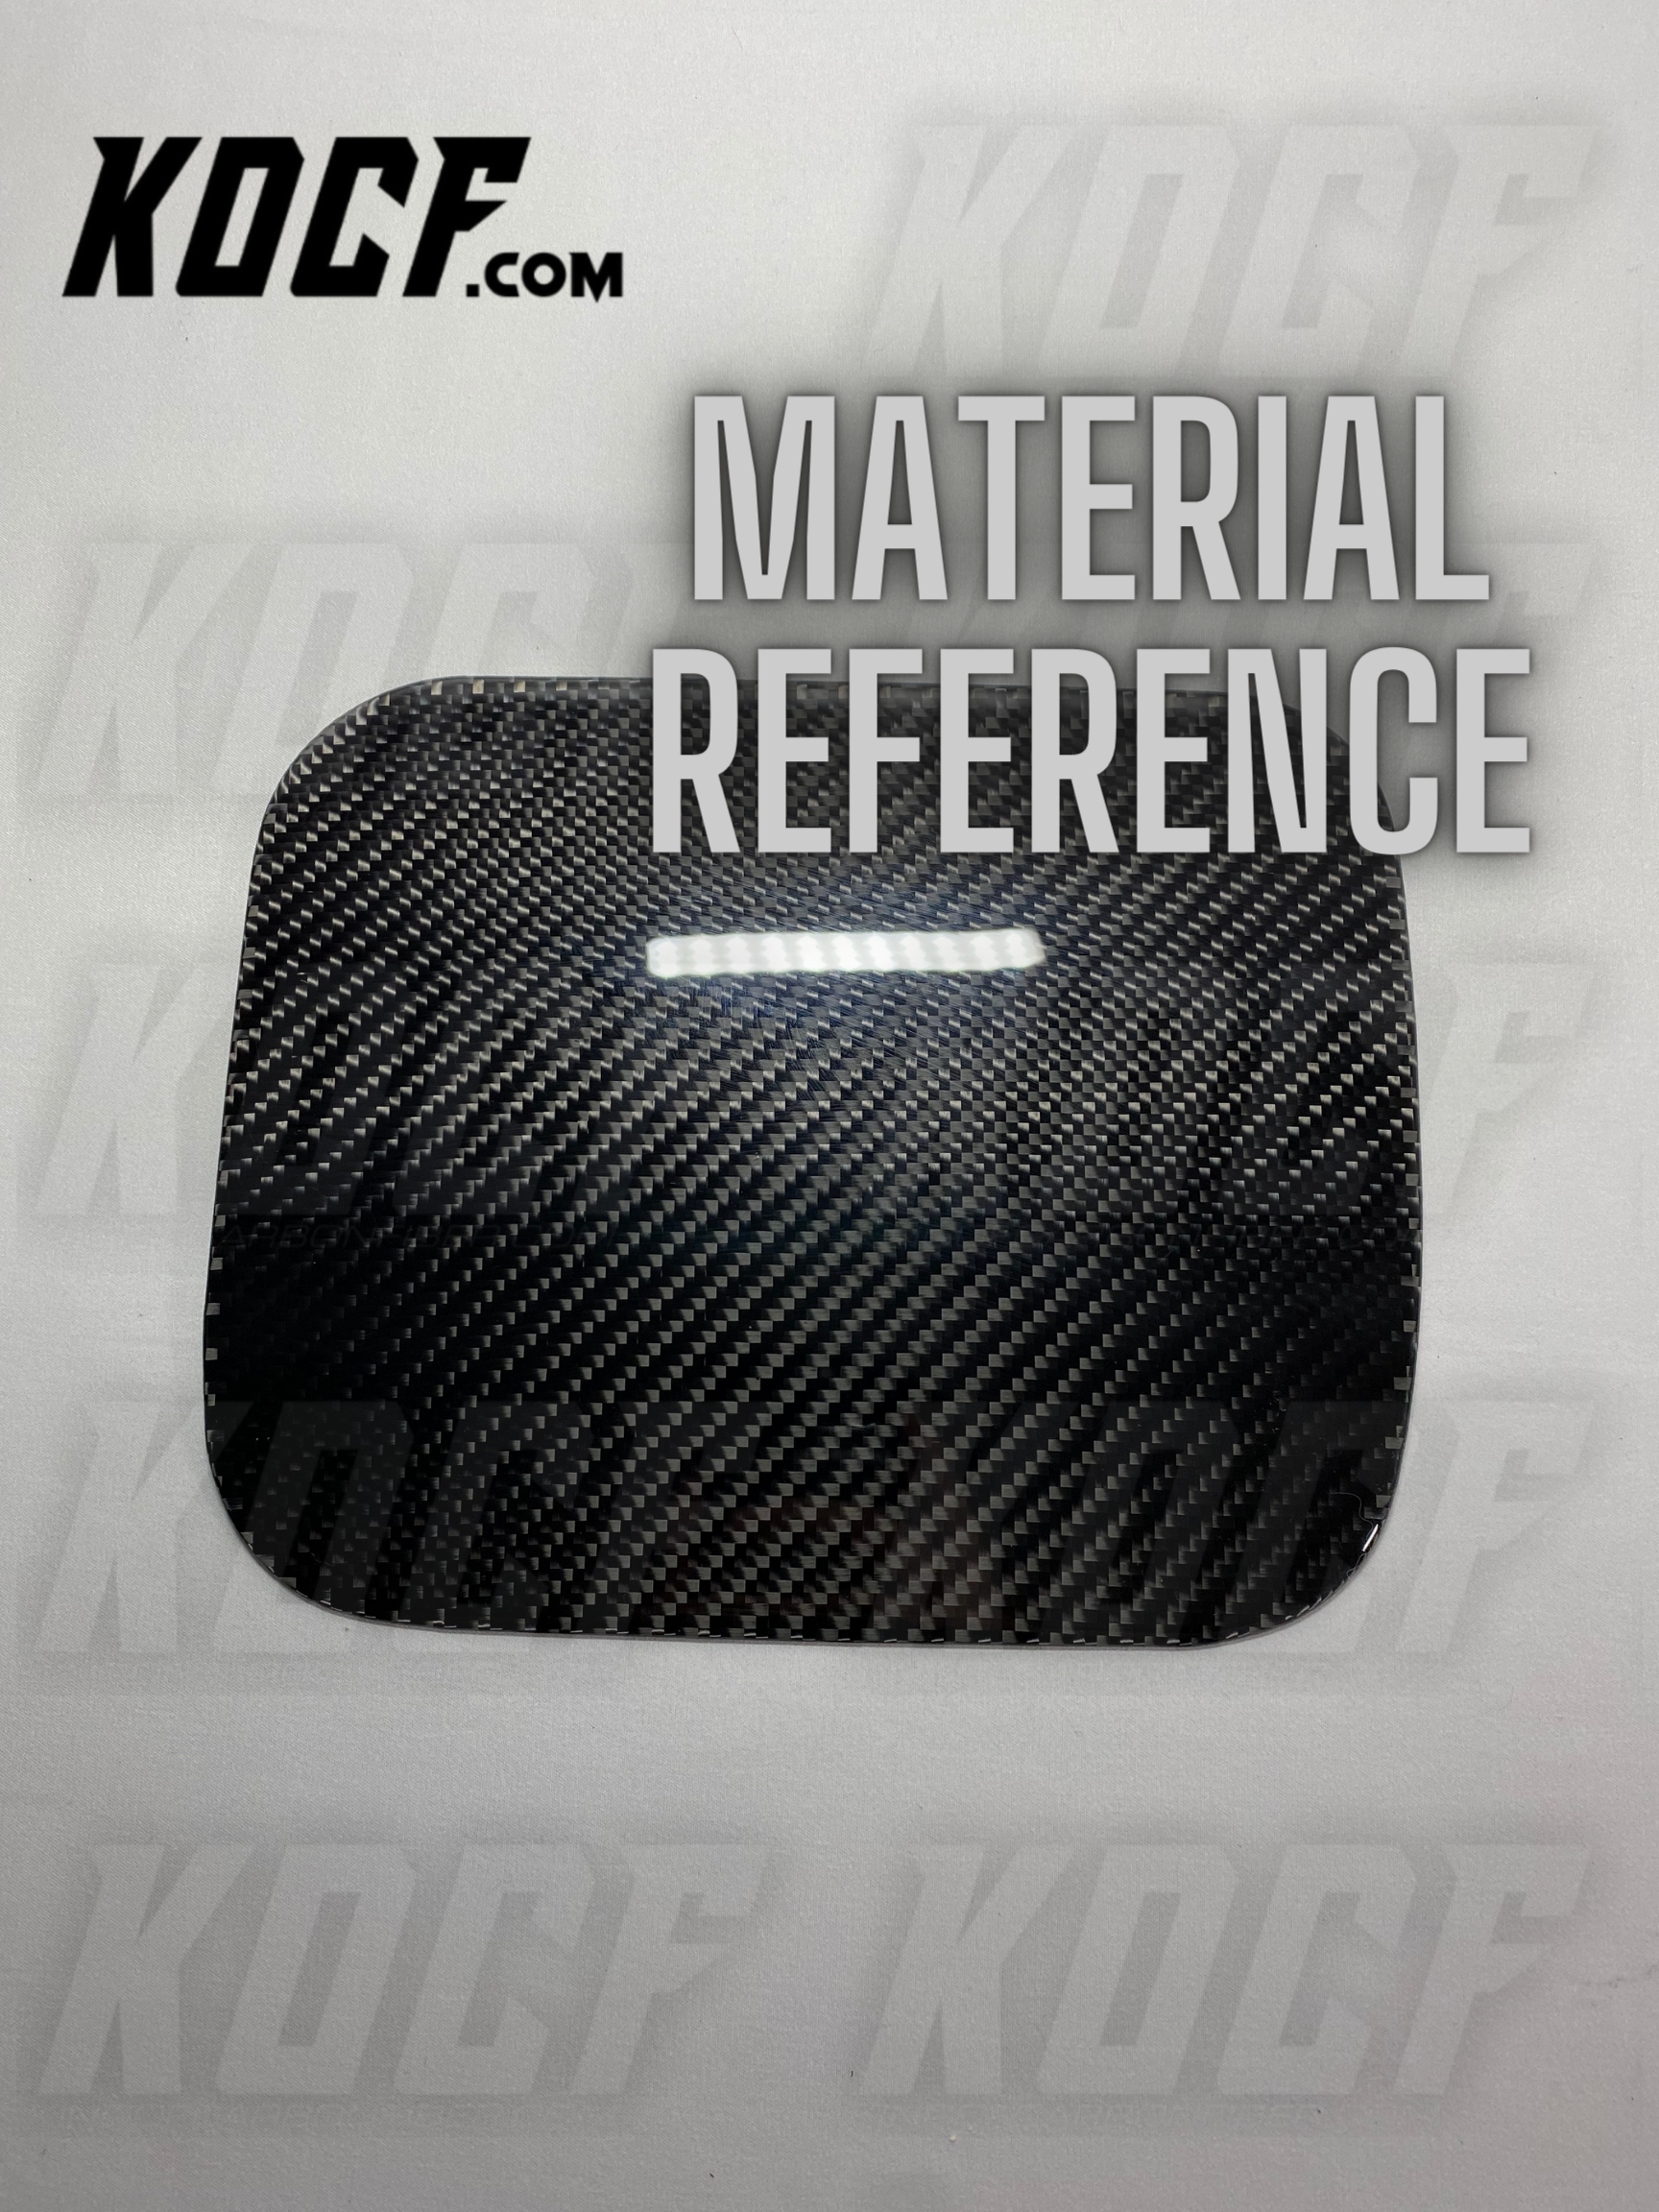 2022+ 11th Gen Civic Honda Civic Carbon Fiber Center Console Cover - KOCF.com - Car Parts